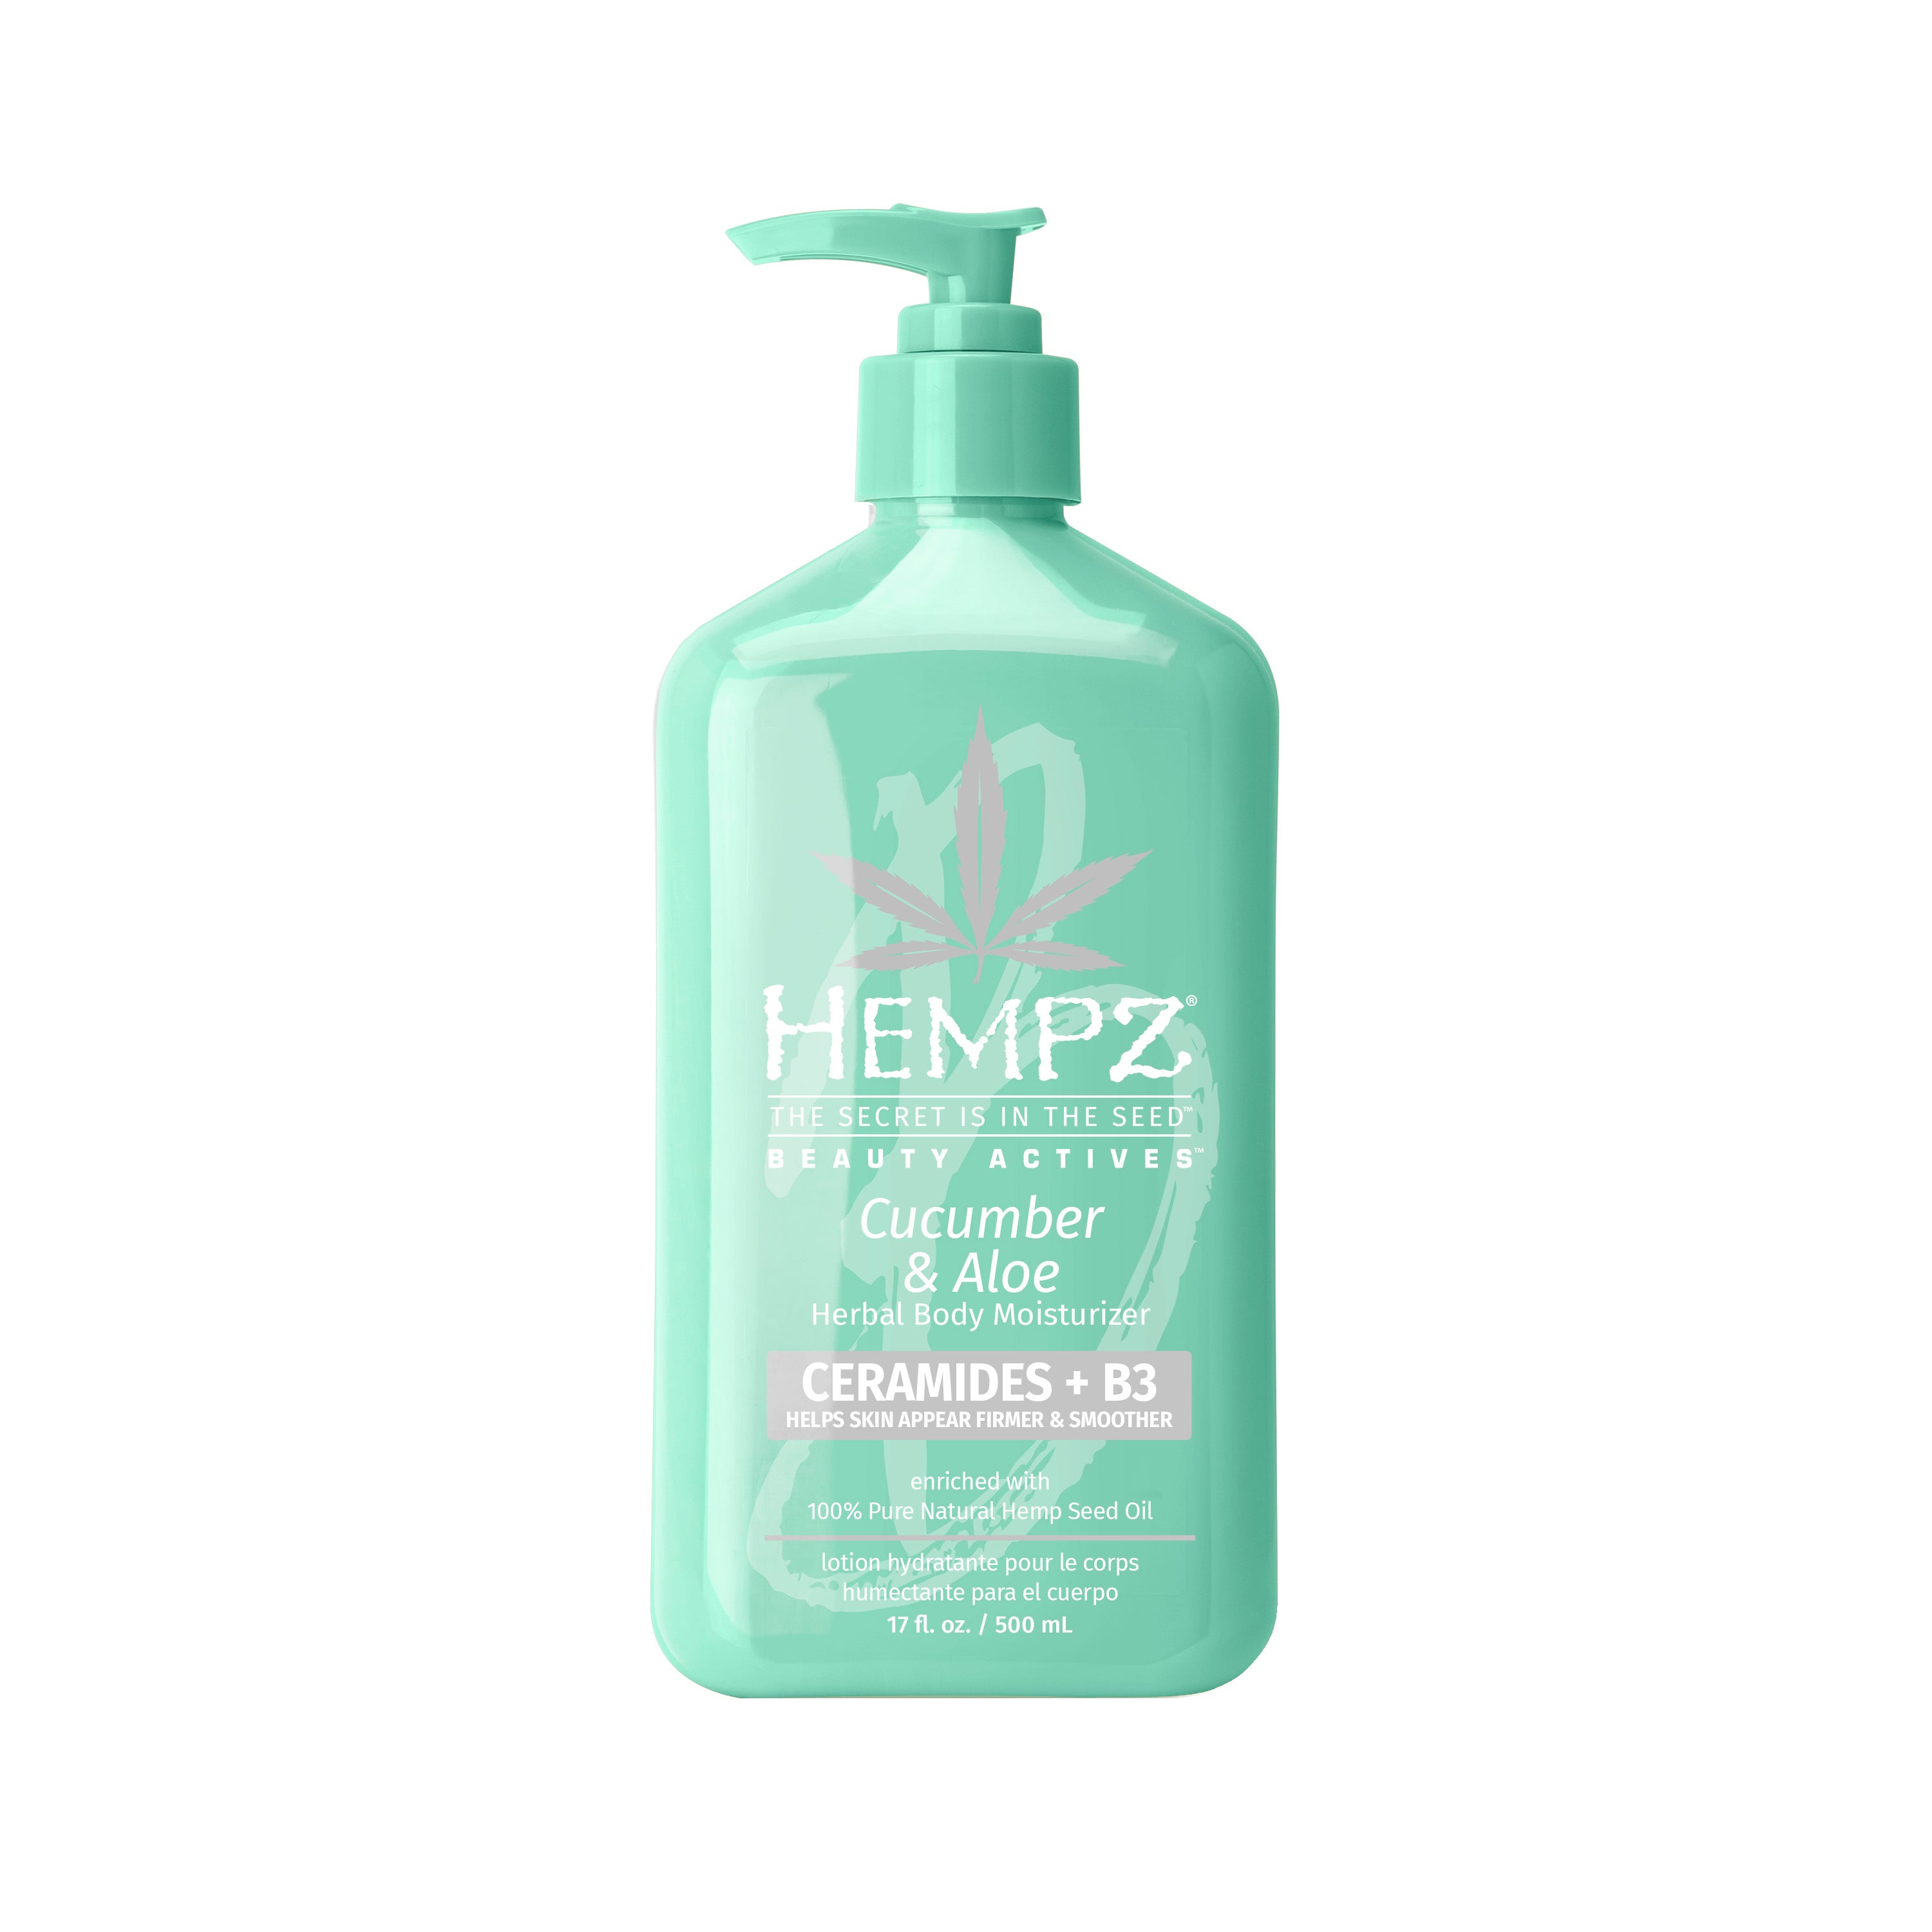 Hempz - Cucumber & Aloe Herbal Body Moisturizer - Creata Beauty - Professional Beauty Products